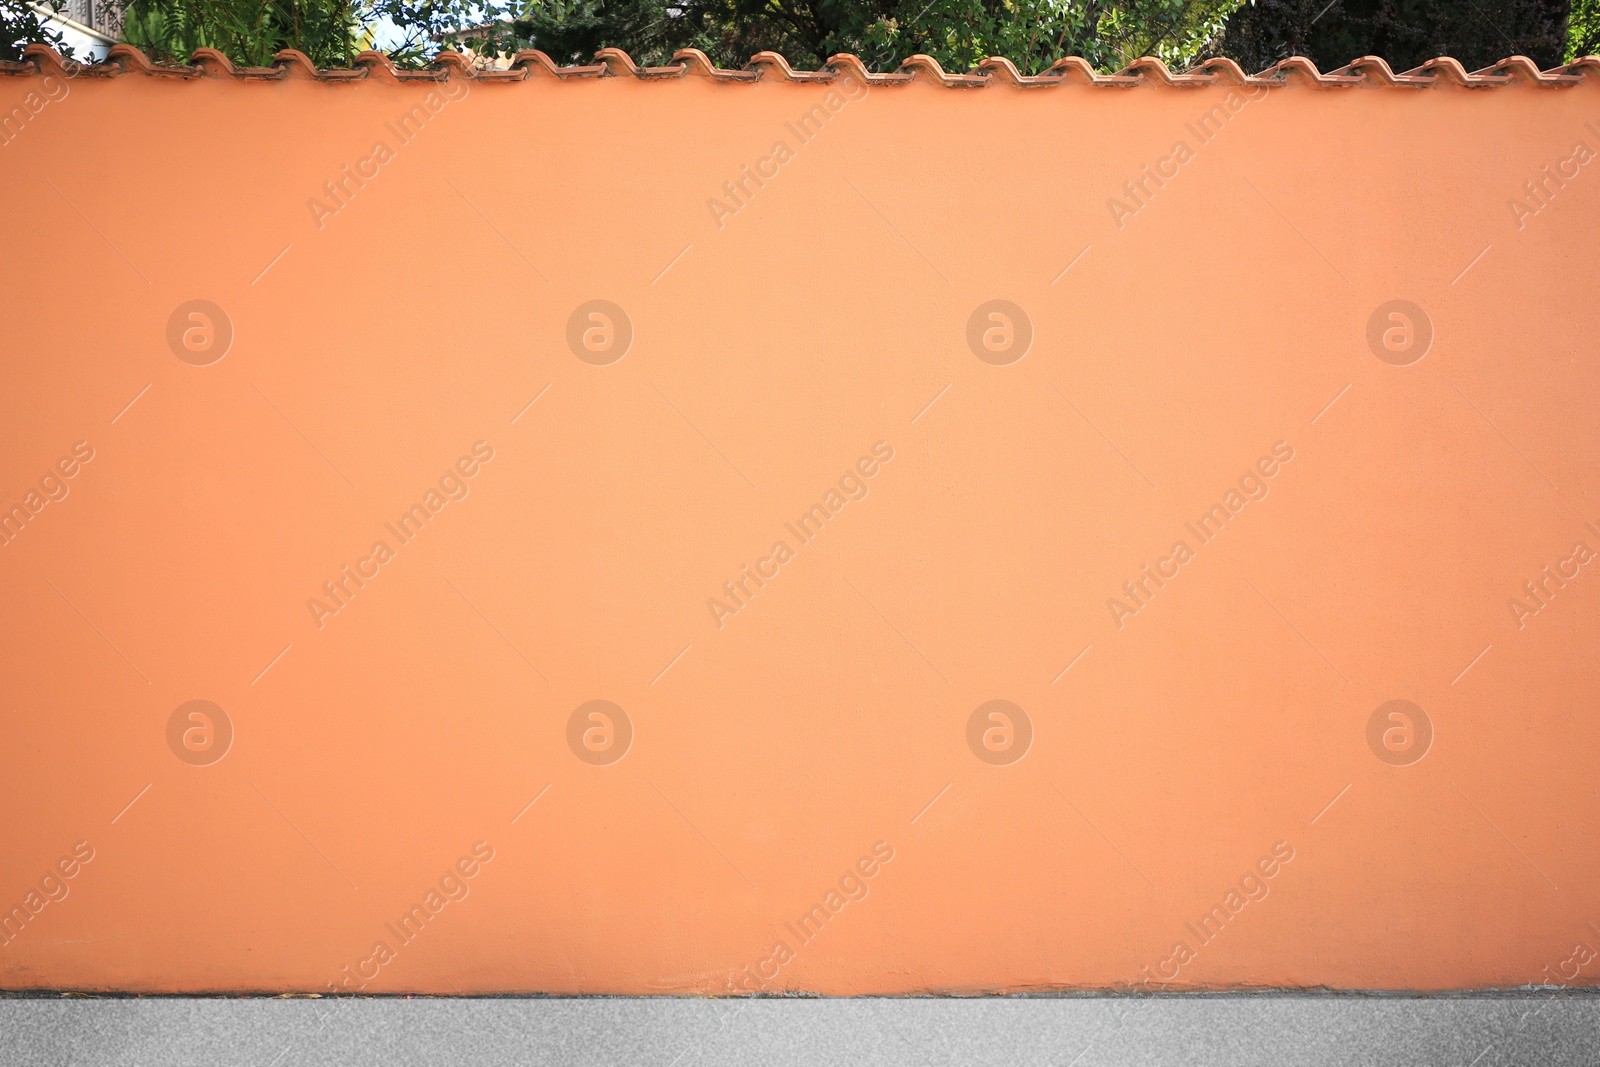 Photo of Beautiful orange wall and concrete sidewalk outdoors